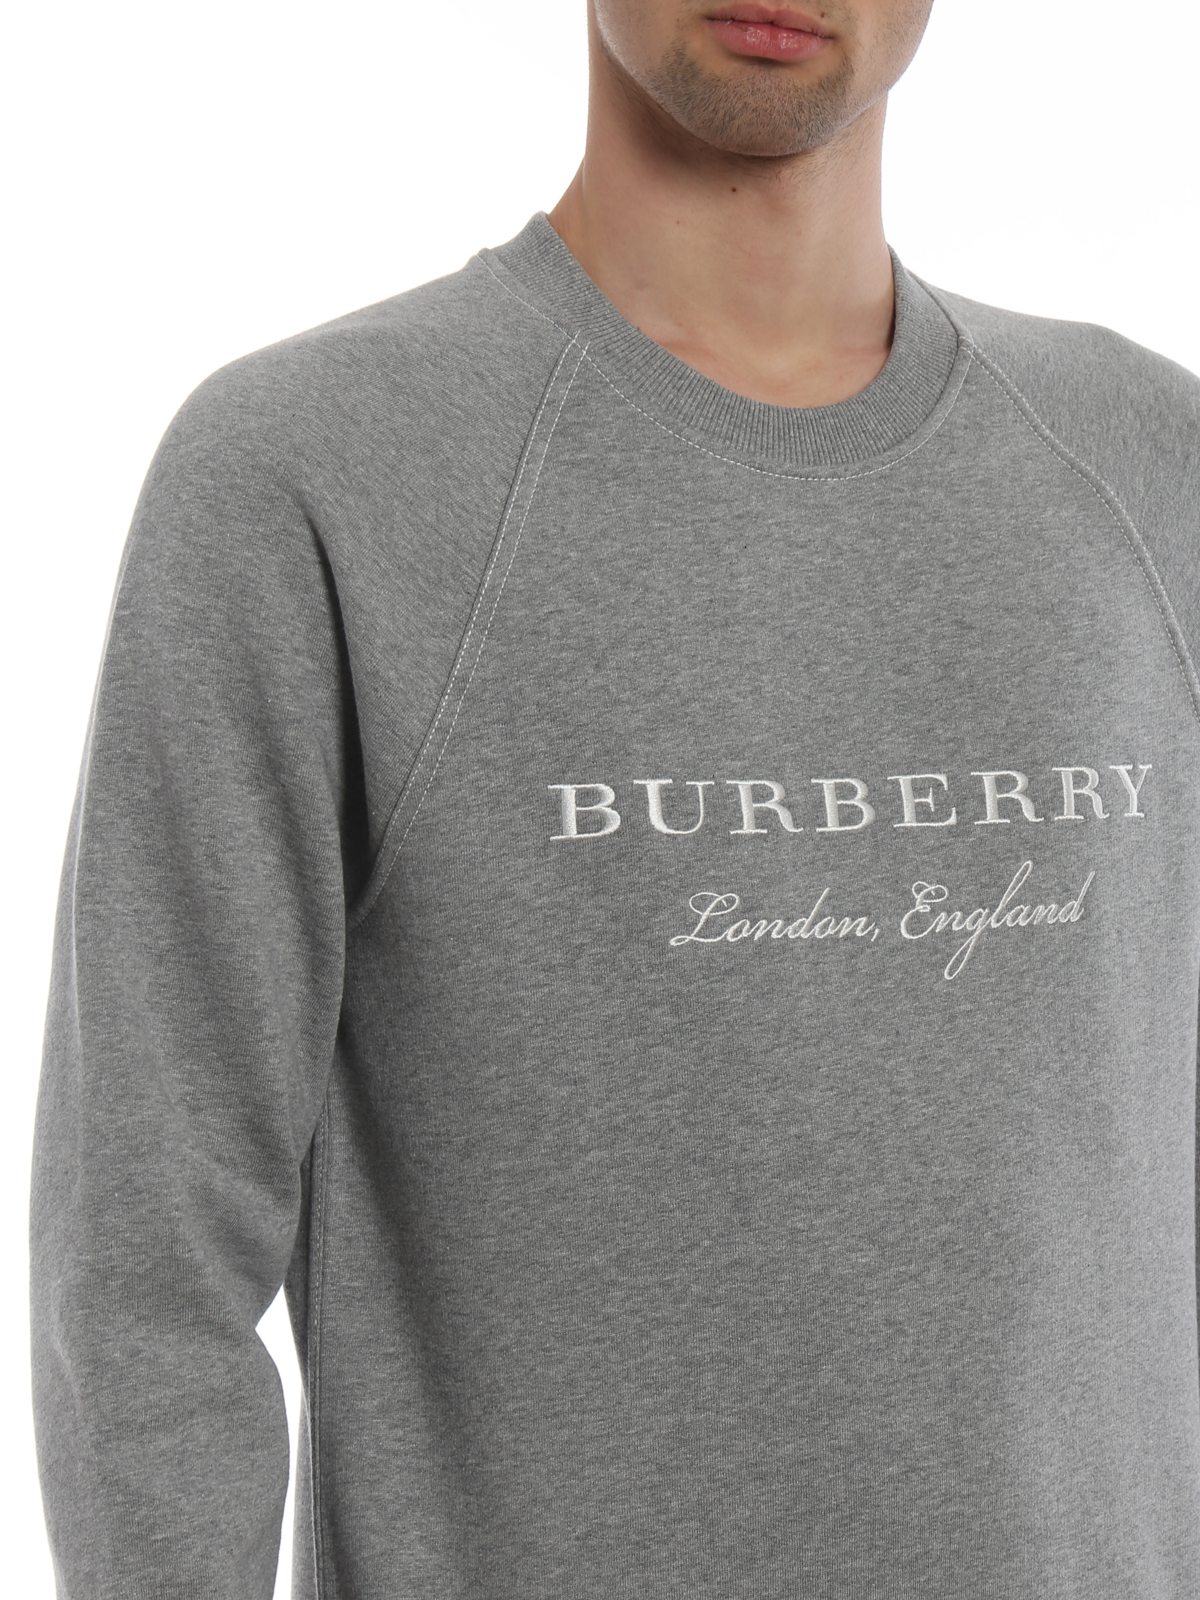 burberry grey sweats